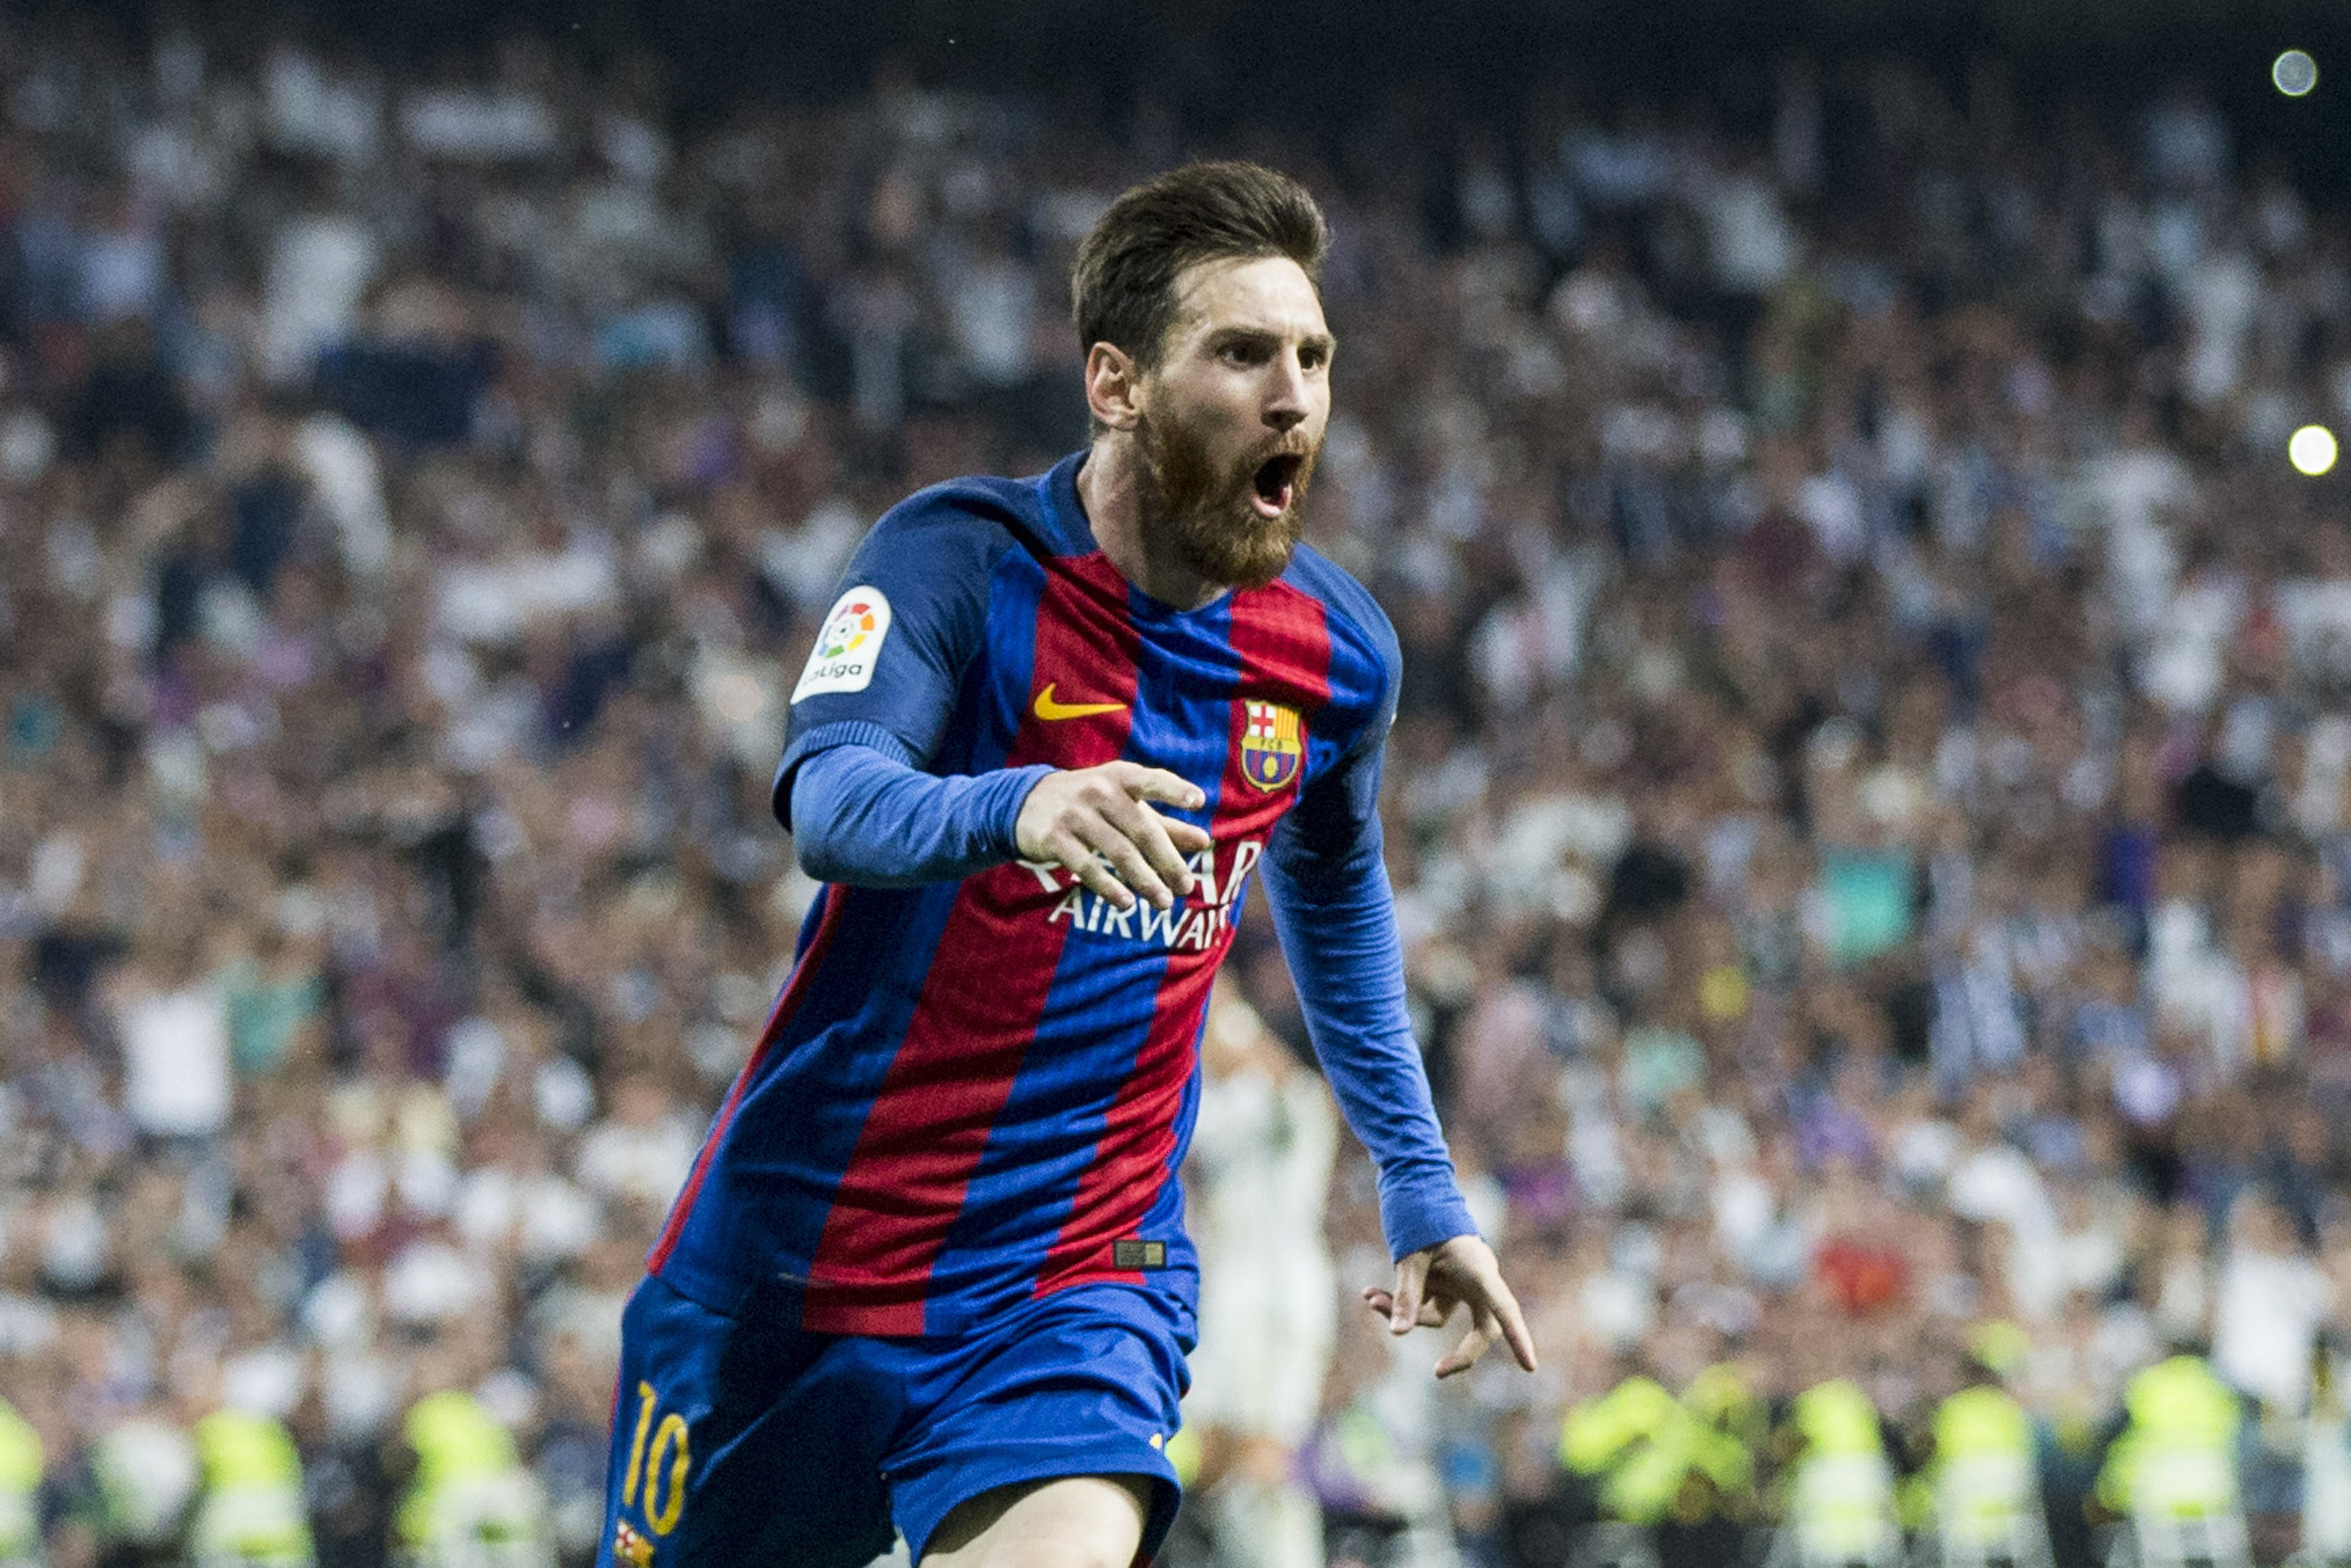 Lionel Messi celebration vs Real Madrid: Barcelona legend's infamous  Clasico jersey taunt explained